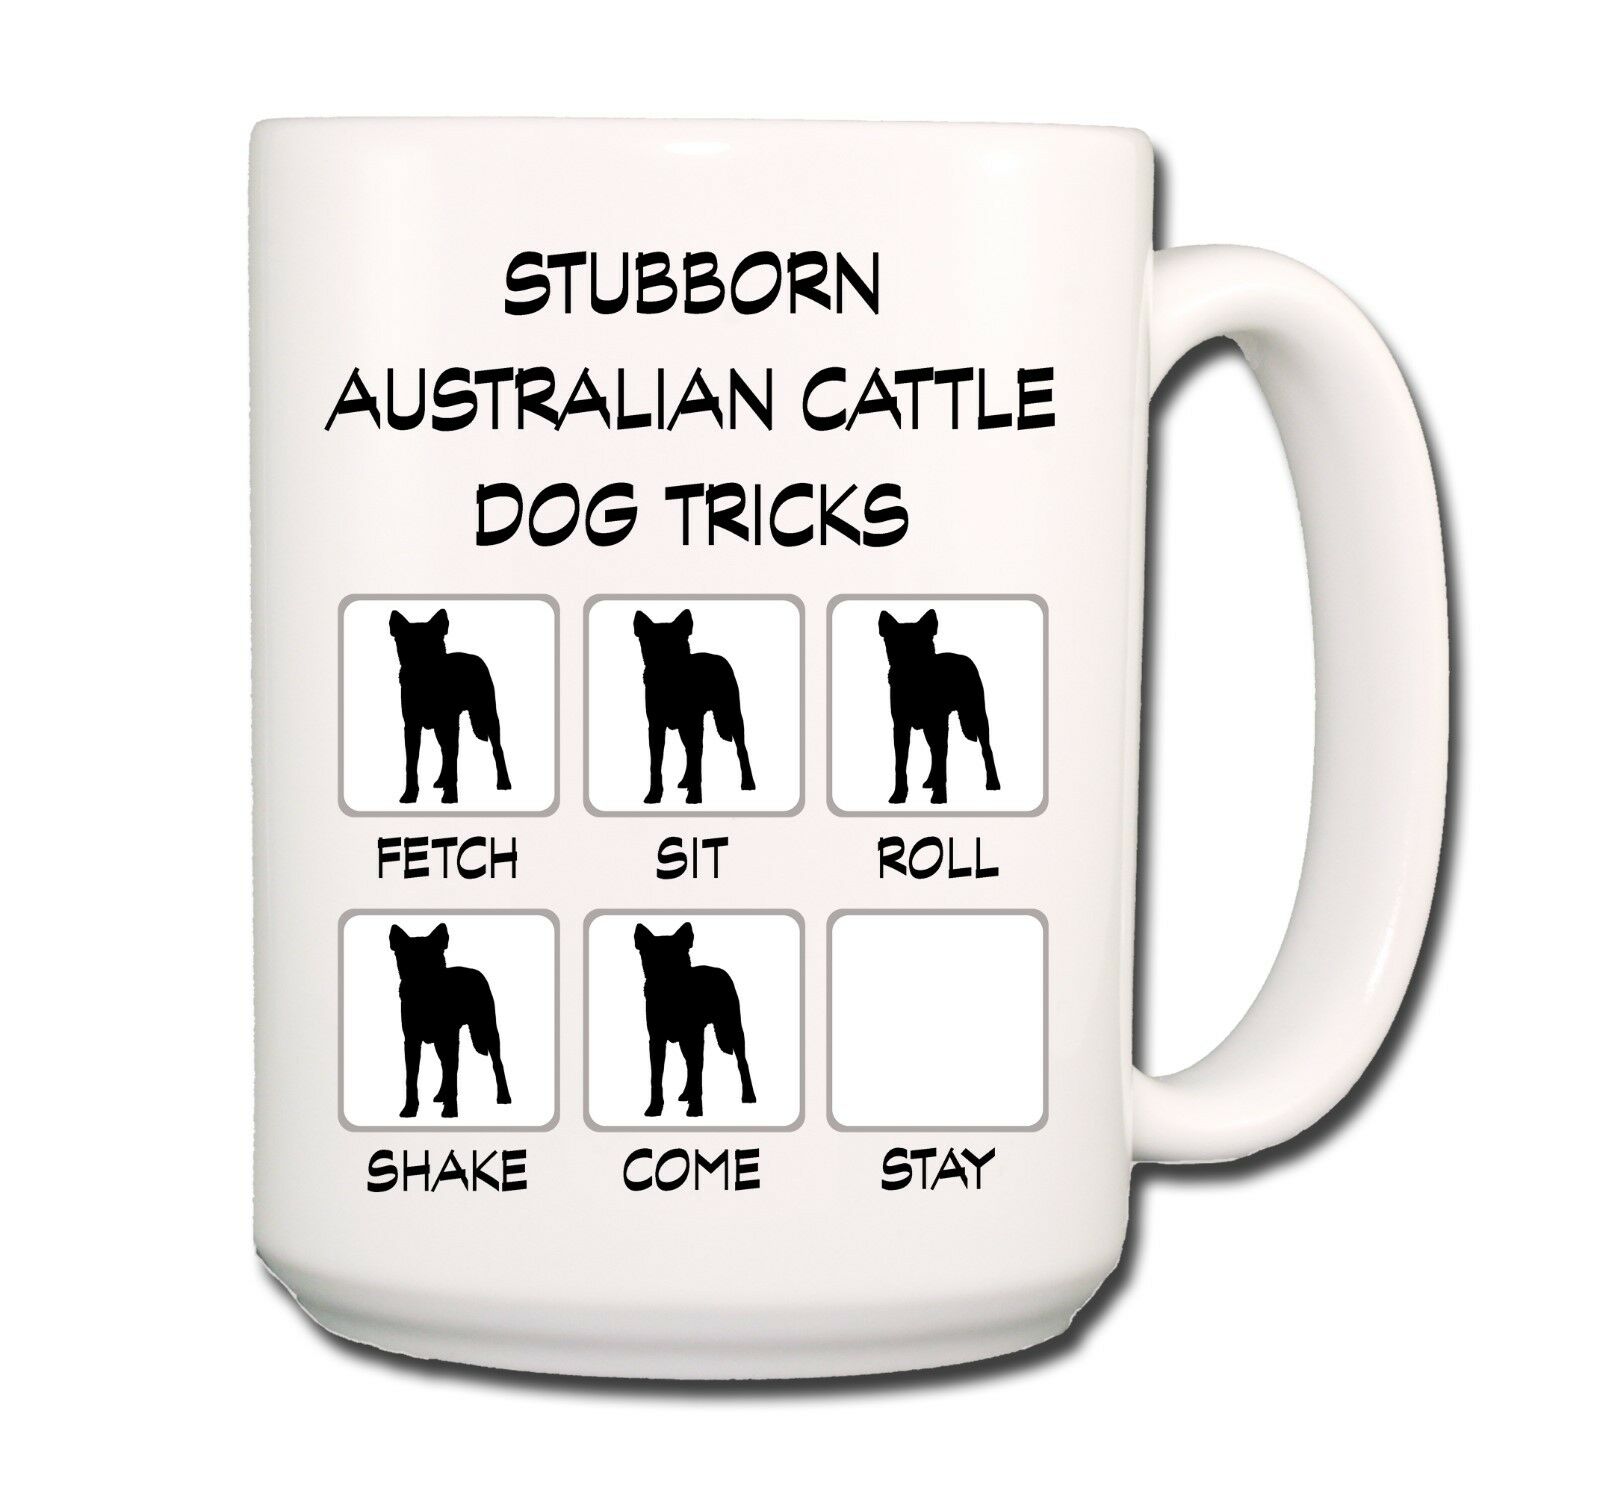 AUSTRALIAN CATTLE DOG Stubborn Tricks EXTRA LARGE 15oz COFFEE MUG